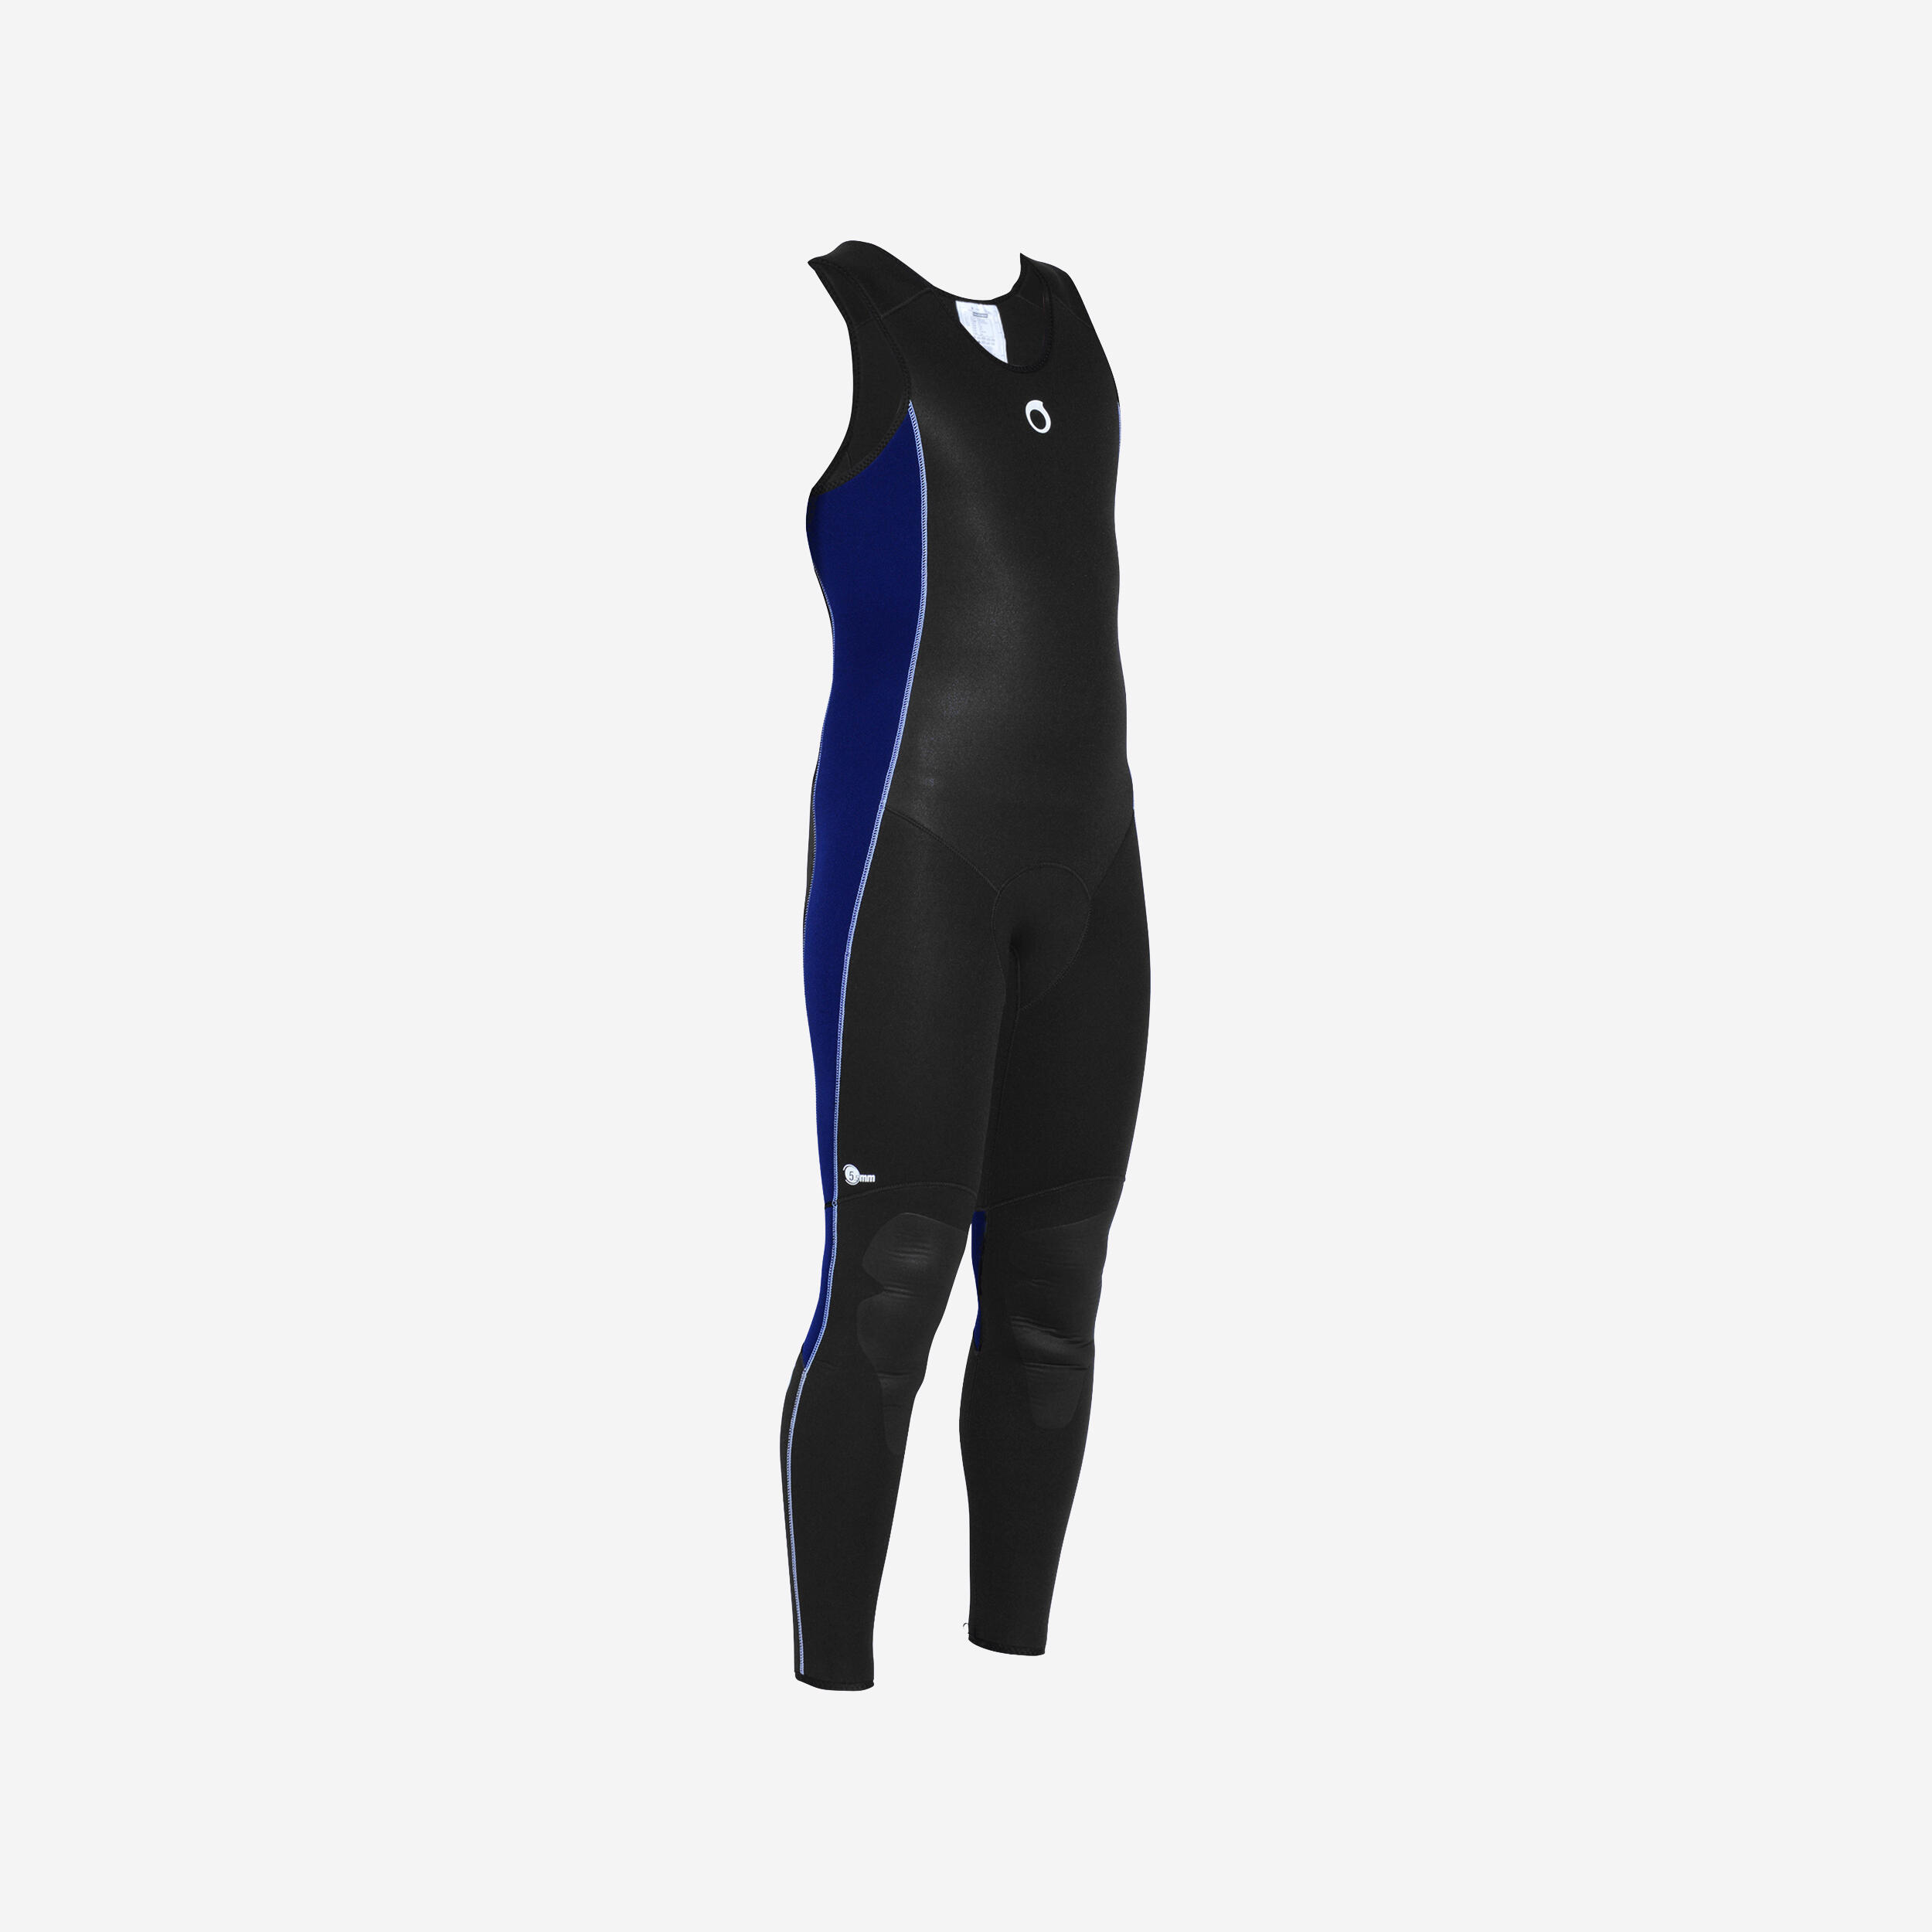 5mm wetsuit decathlon